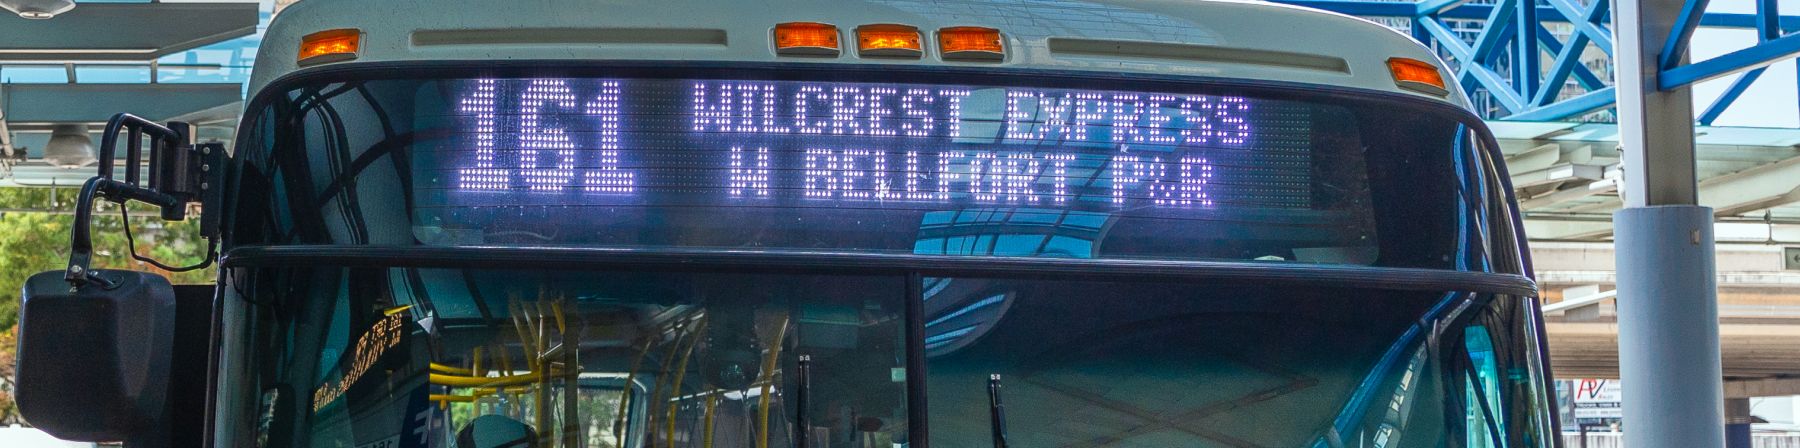 161 Wilcrest Express bus